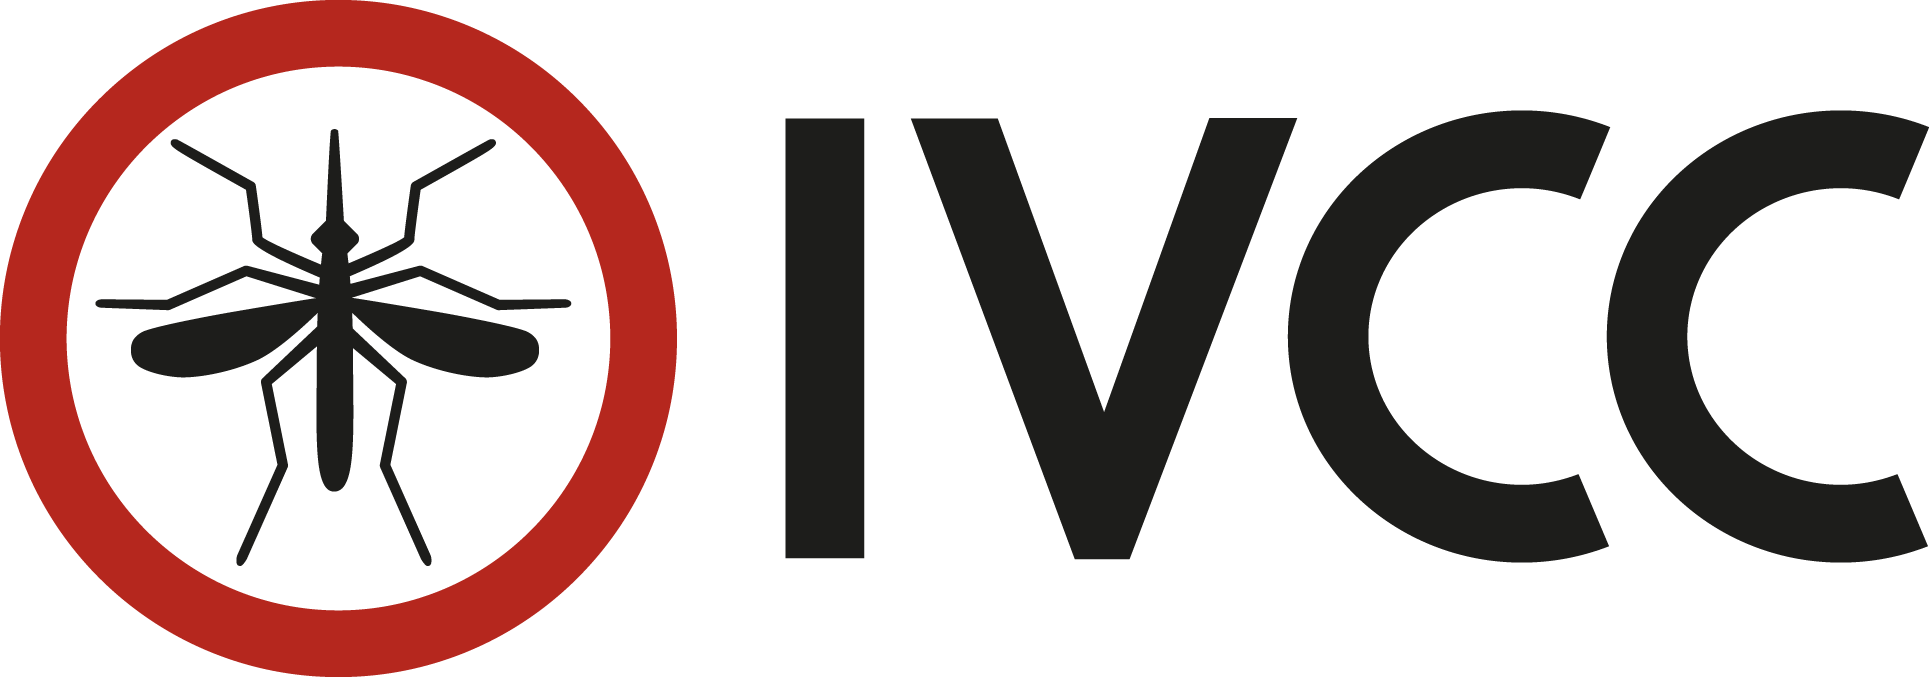 IVCC - Innovative Vector Control Consortium